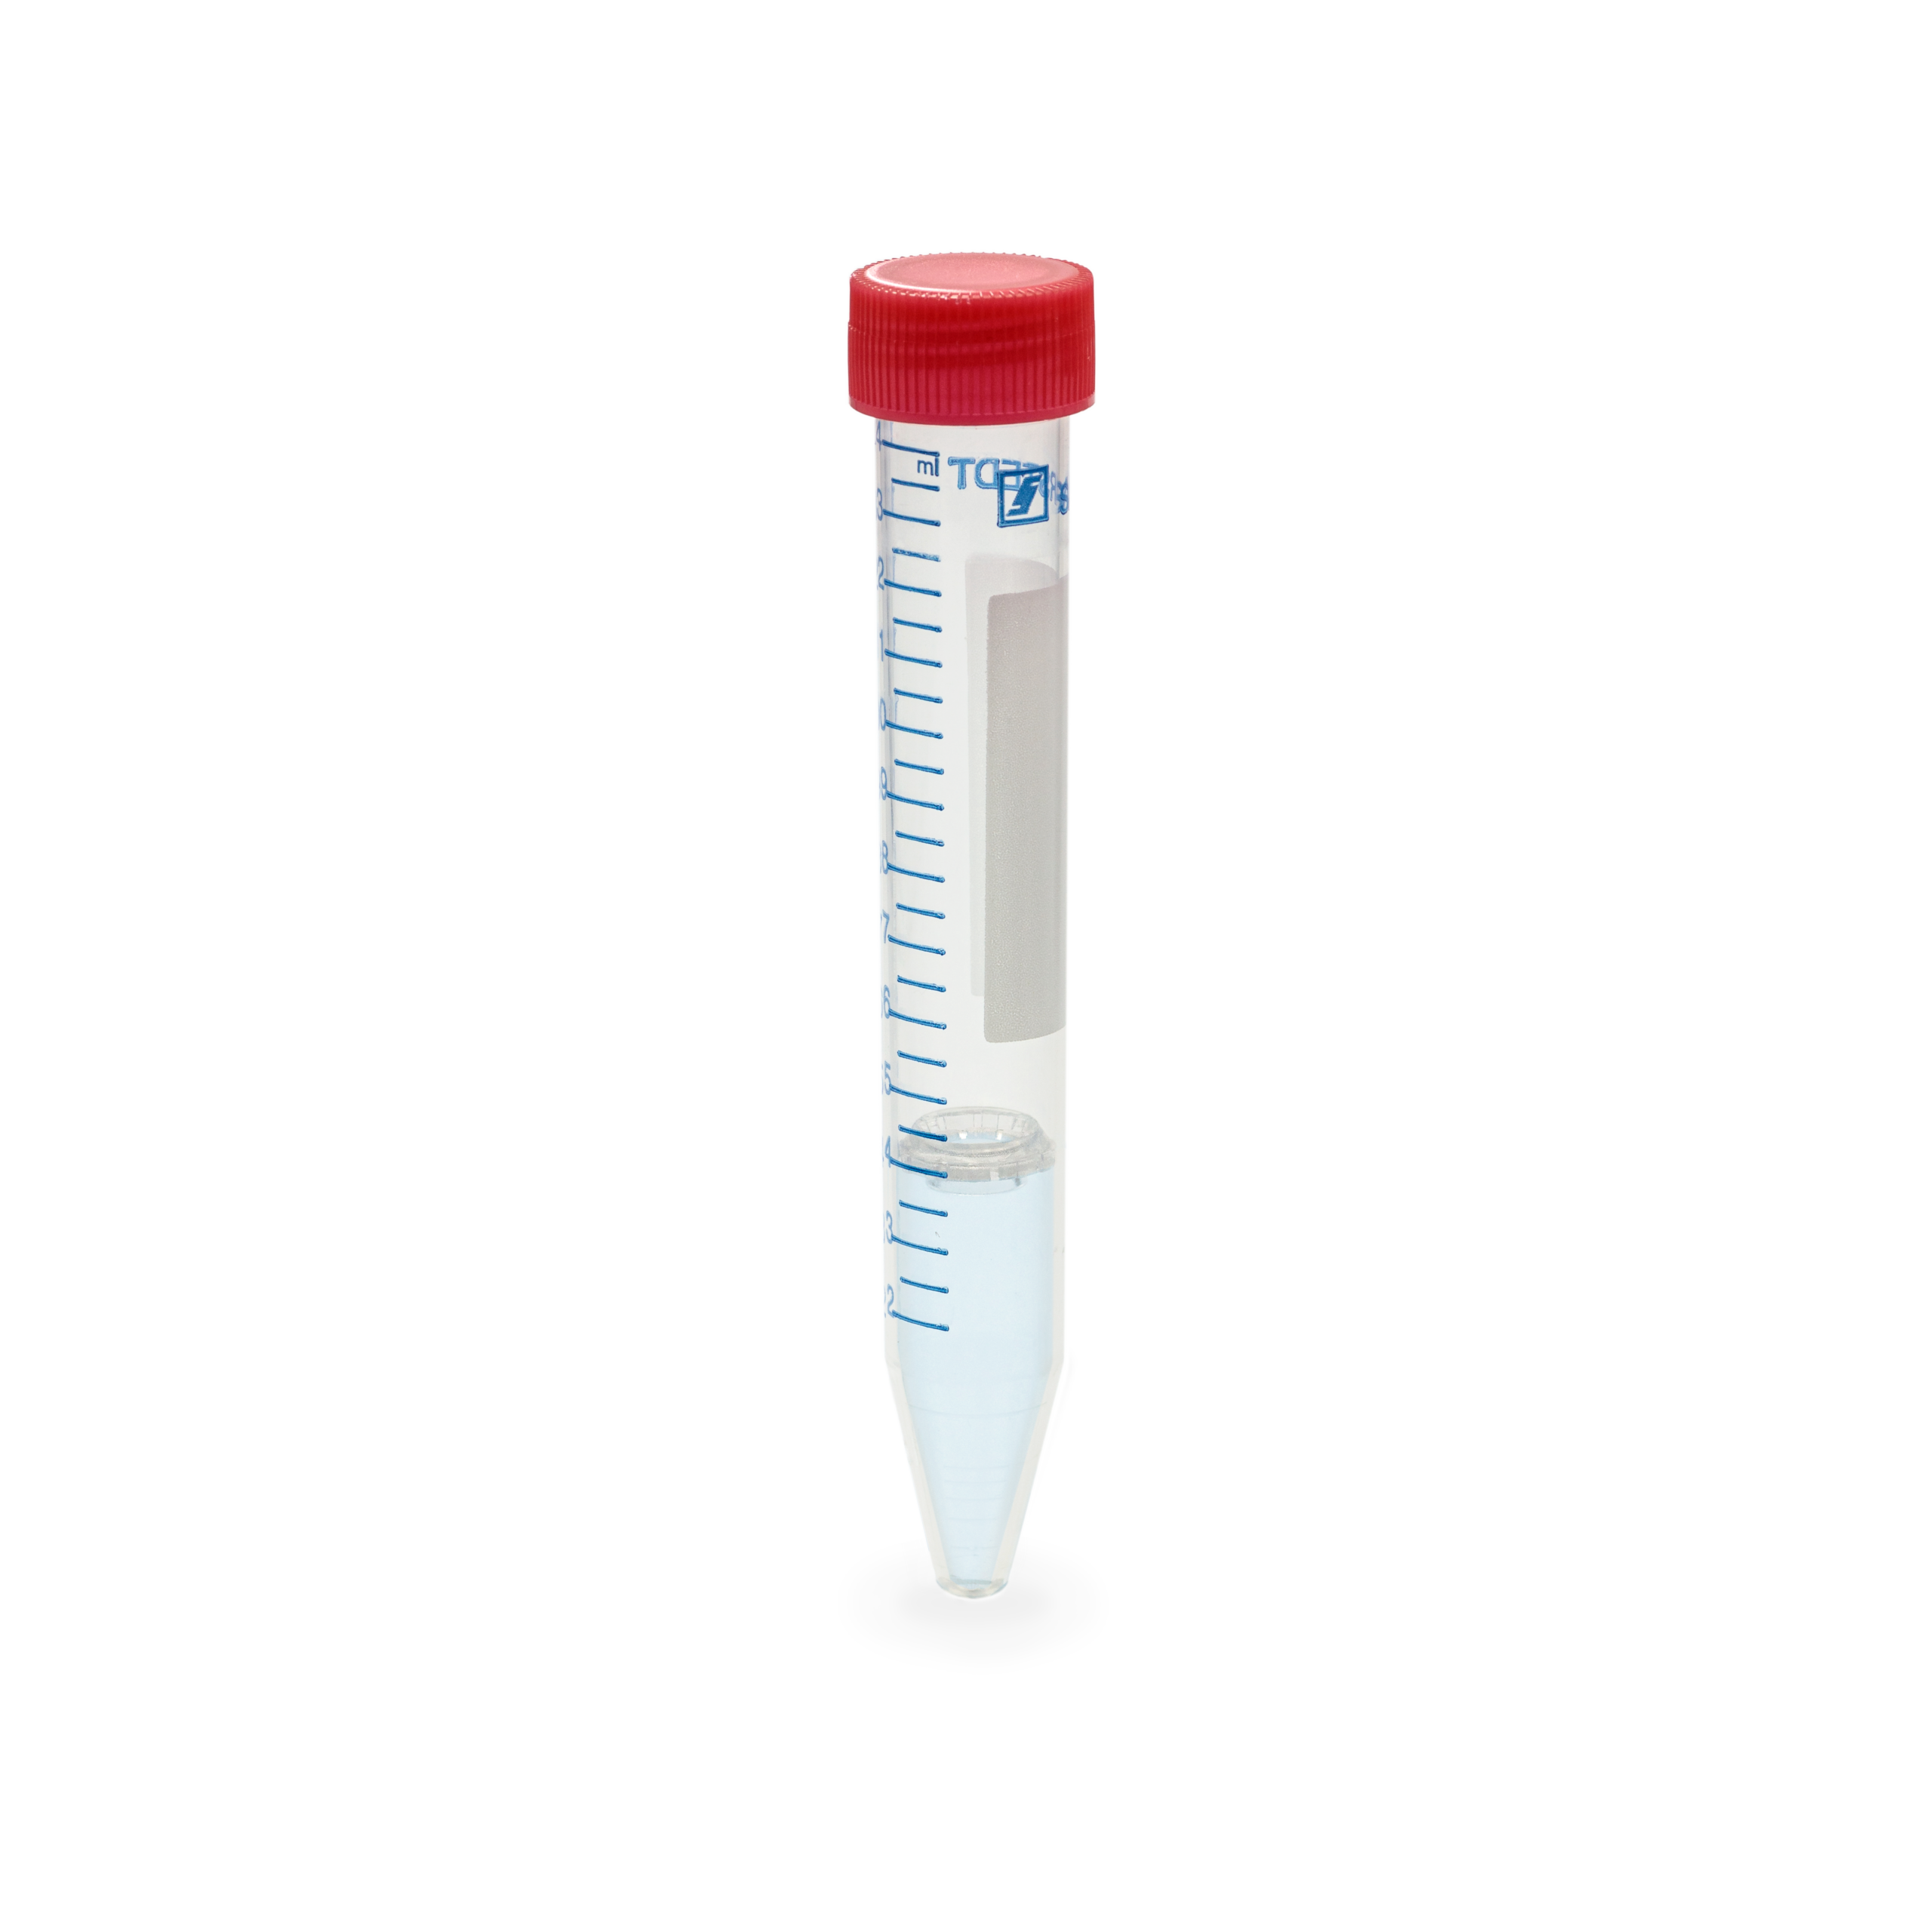 Plurimate 15 ml, sterile, prefilled Leuko Spin (1.092 g/ml)